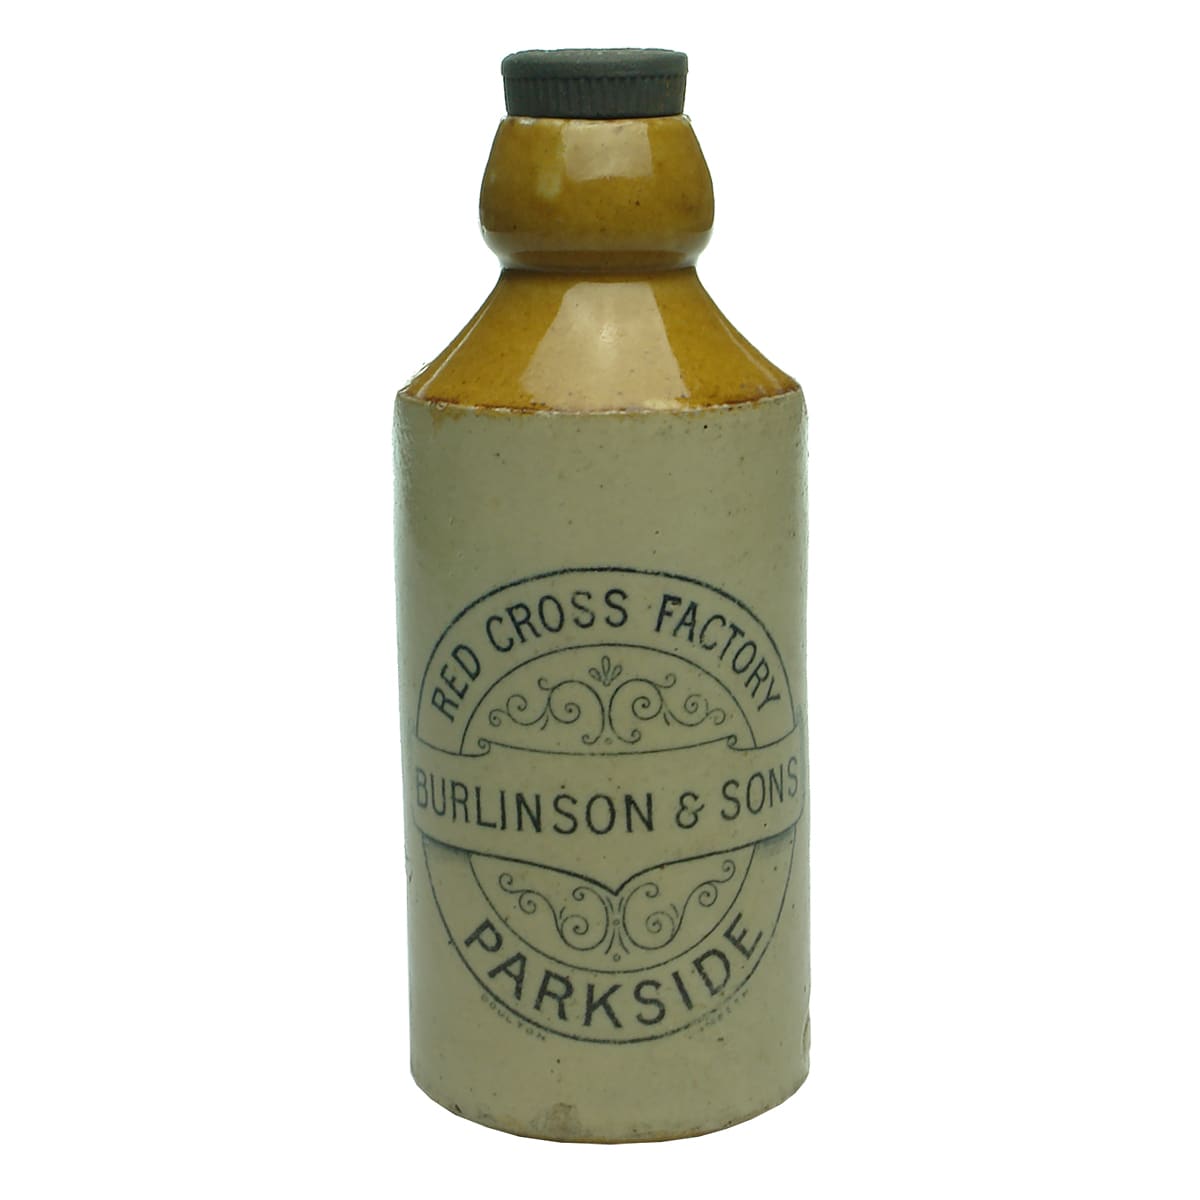 Ginger Beer.  Burlinson & Sons, Red Cross Factory, Parkside.  Internal Thread.  10 oz.